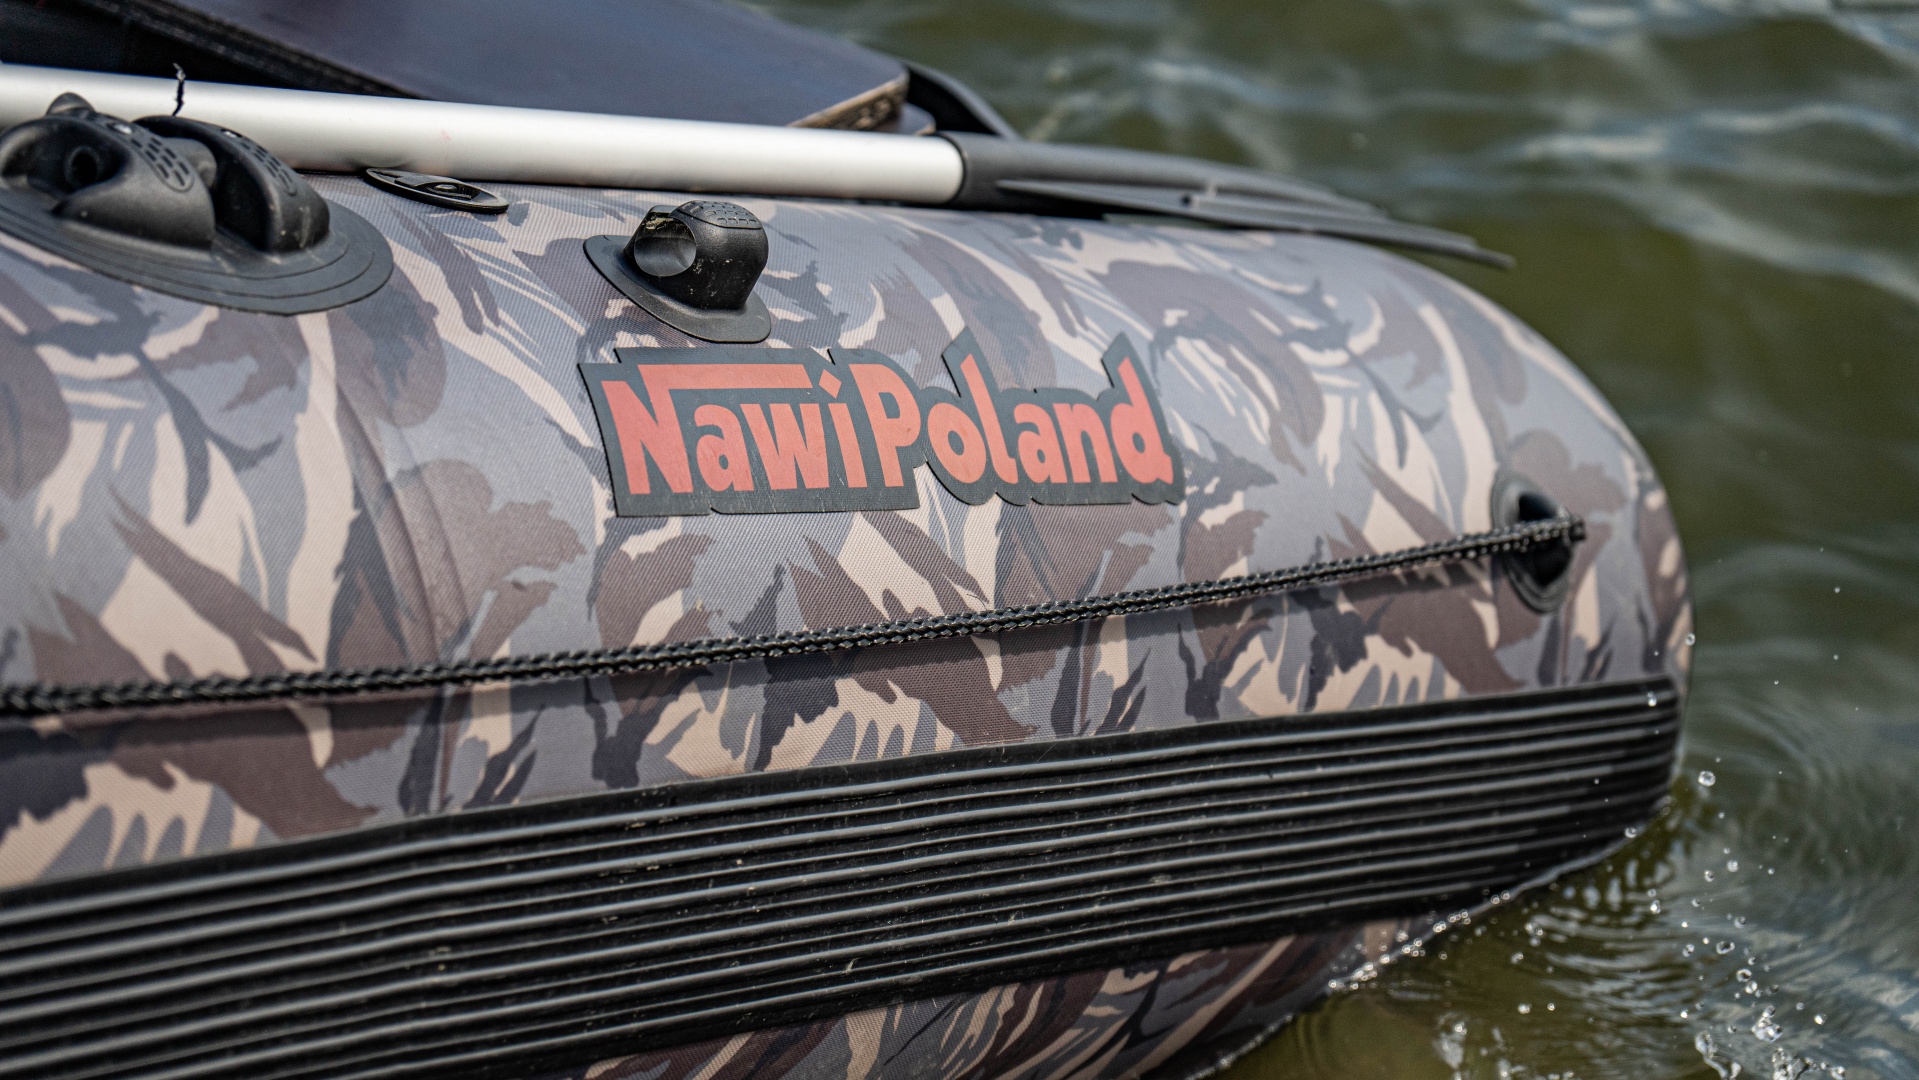 NawiPoland CAT 330 Inflatable Boat - Catamaran